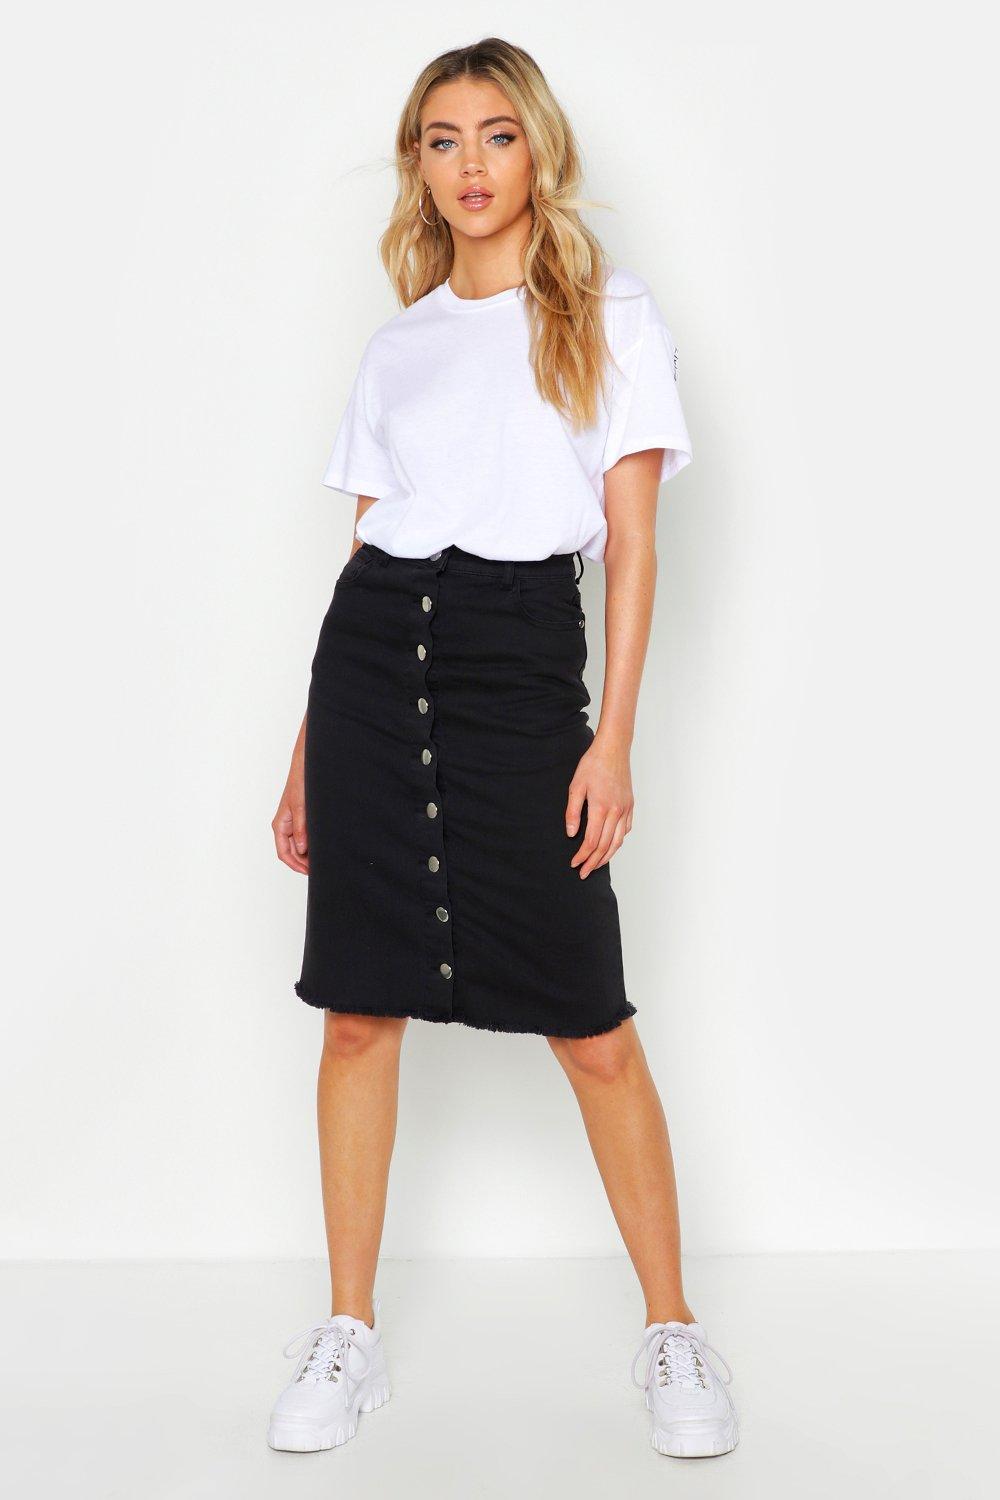 black denim skirt button front